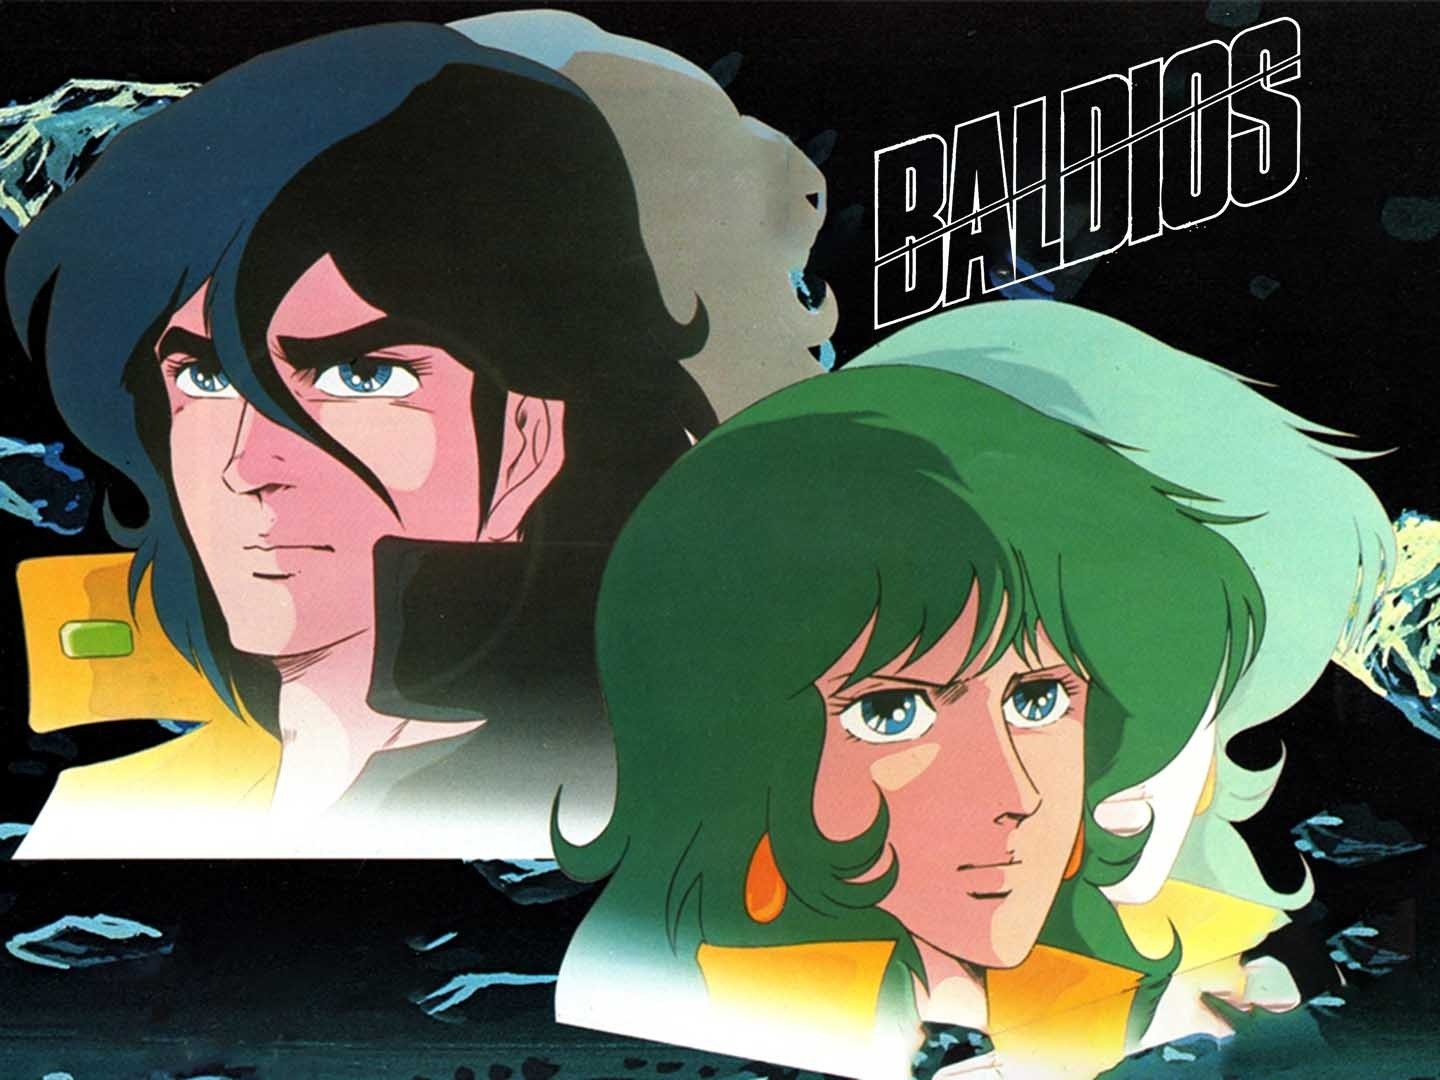 Baldios The Movie Discotek Super Robot Anime Review - YouTube